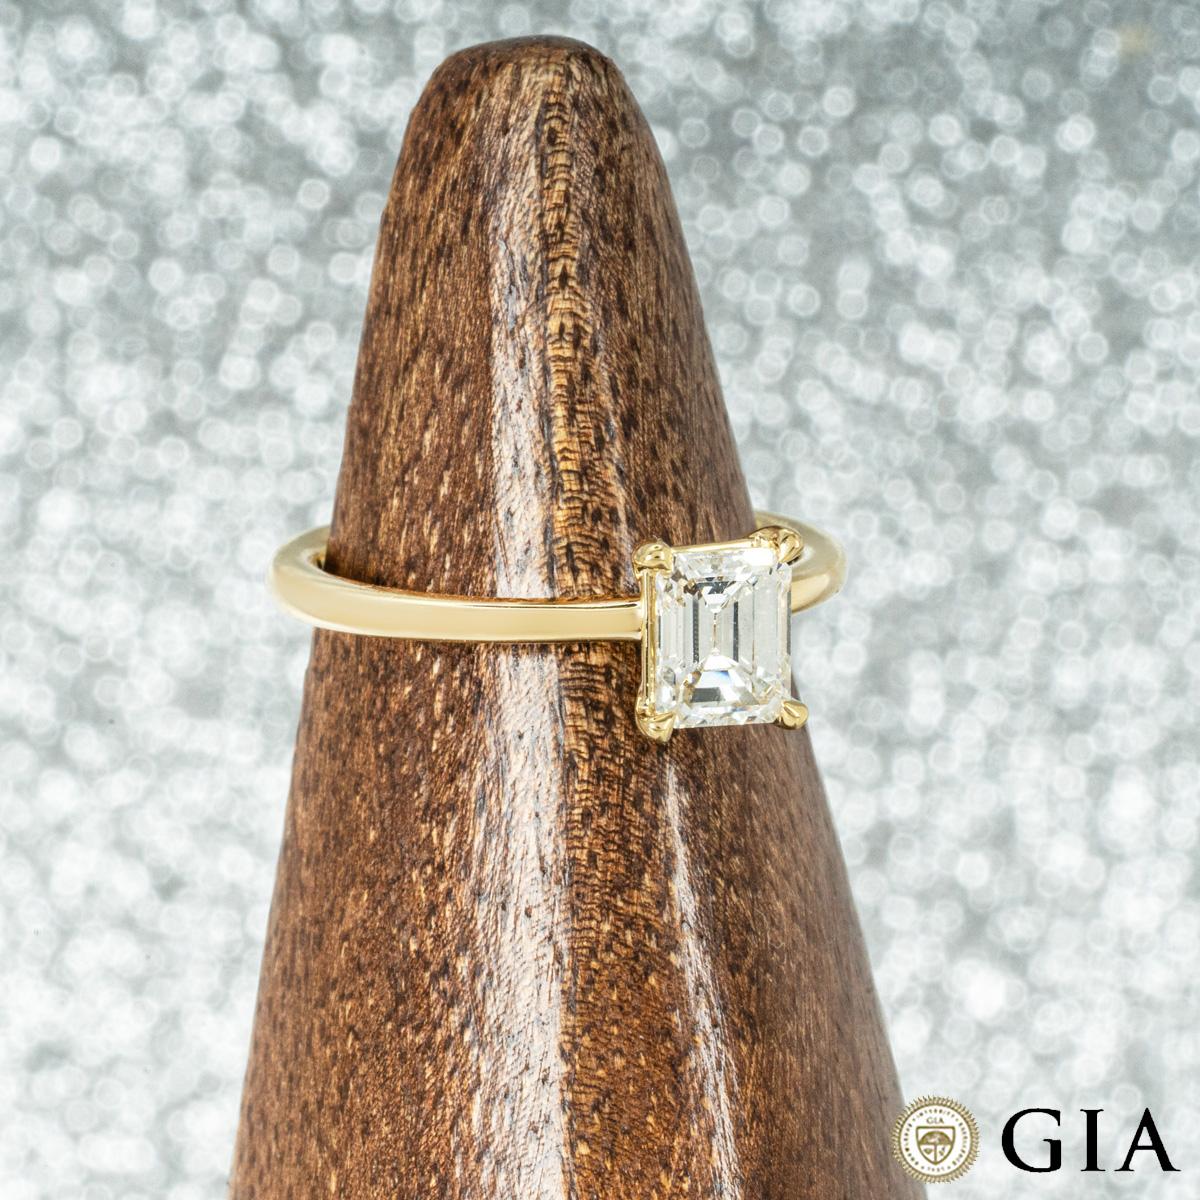 GIA Certified Yellow Gold Emerald Cut Diamond Ring 0.83 Carat E/VS1 For Sale 5